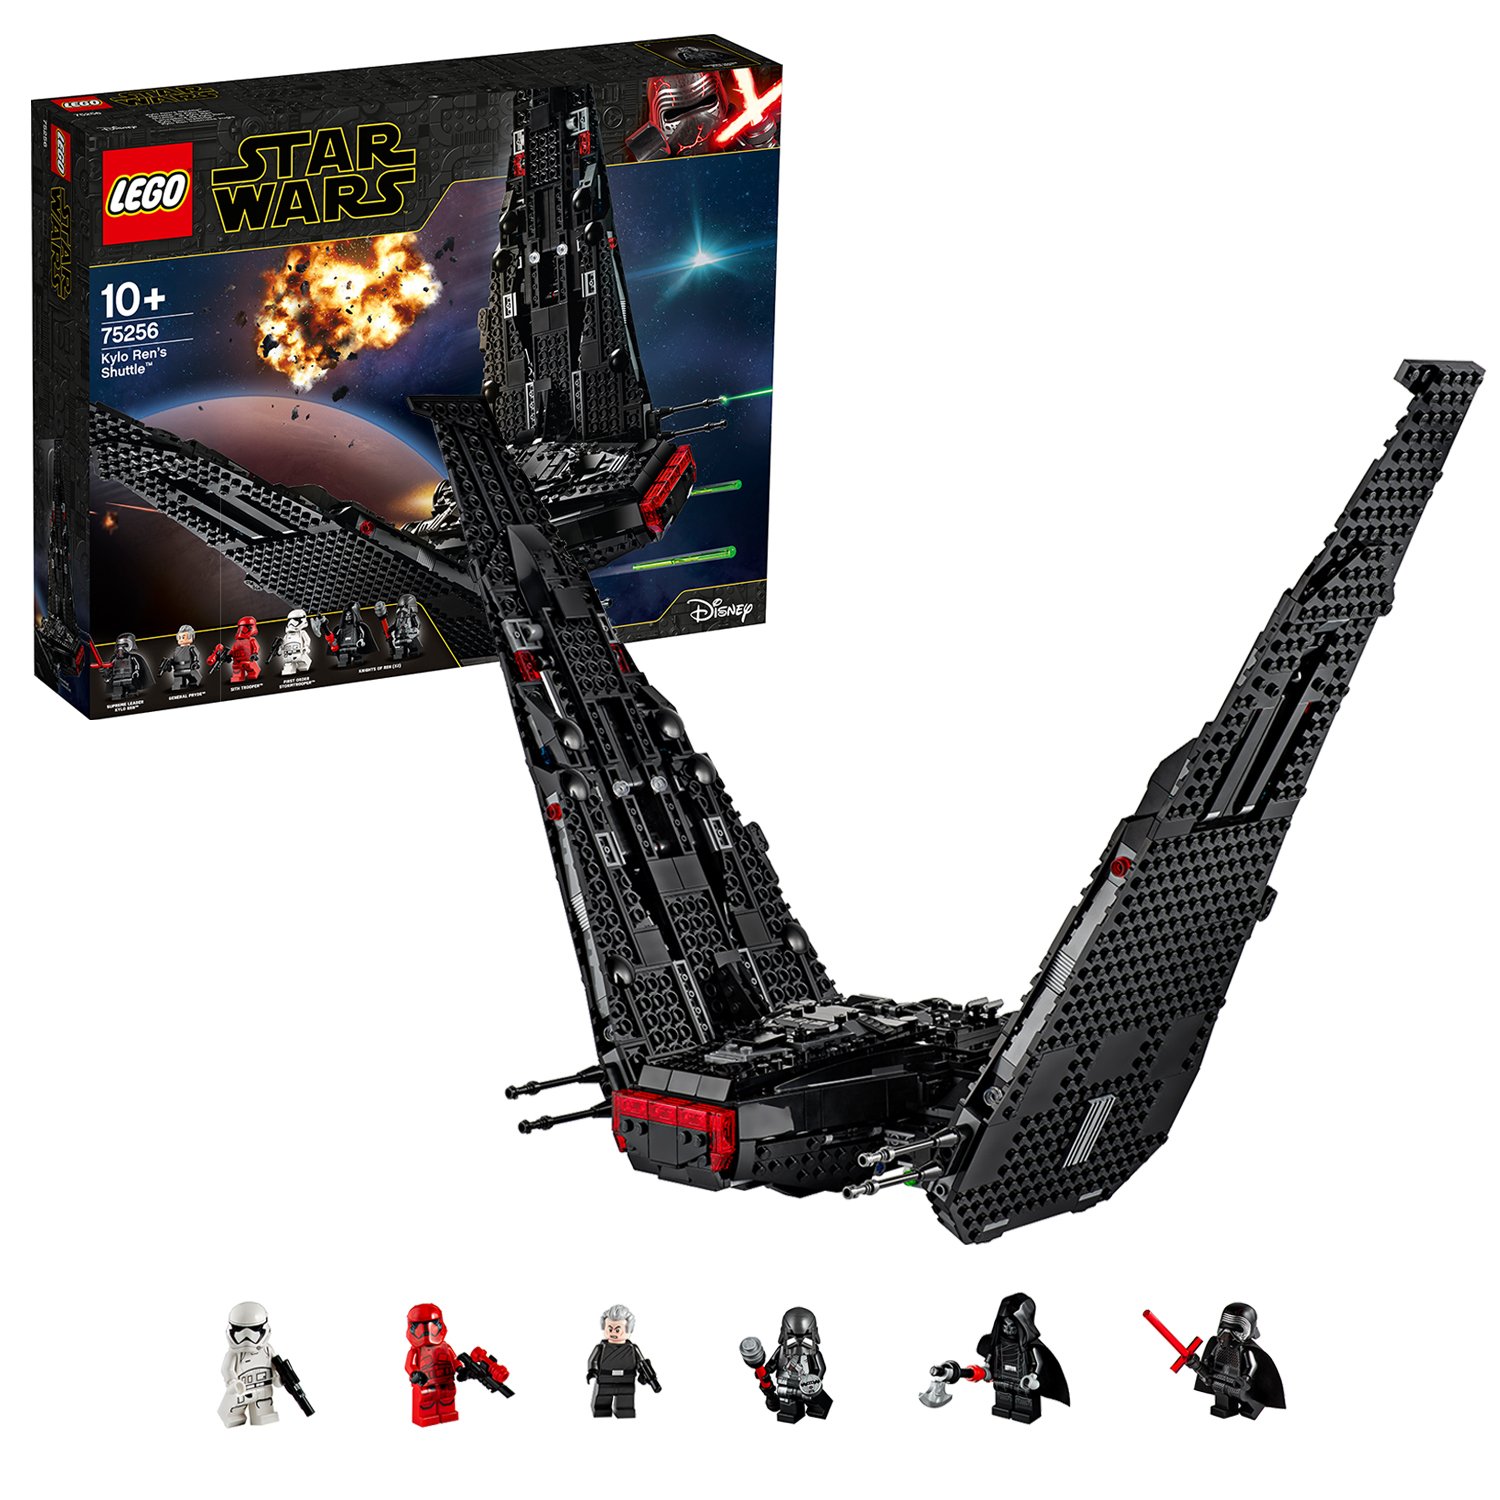 LEGO Star Wars Kylo Ren's Shuttle Building Set Review